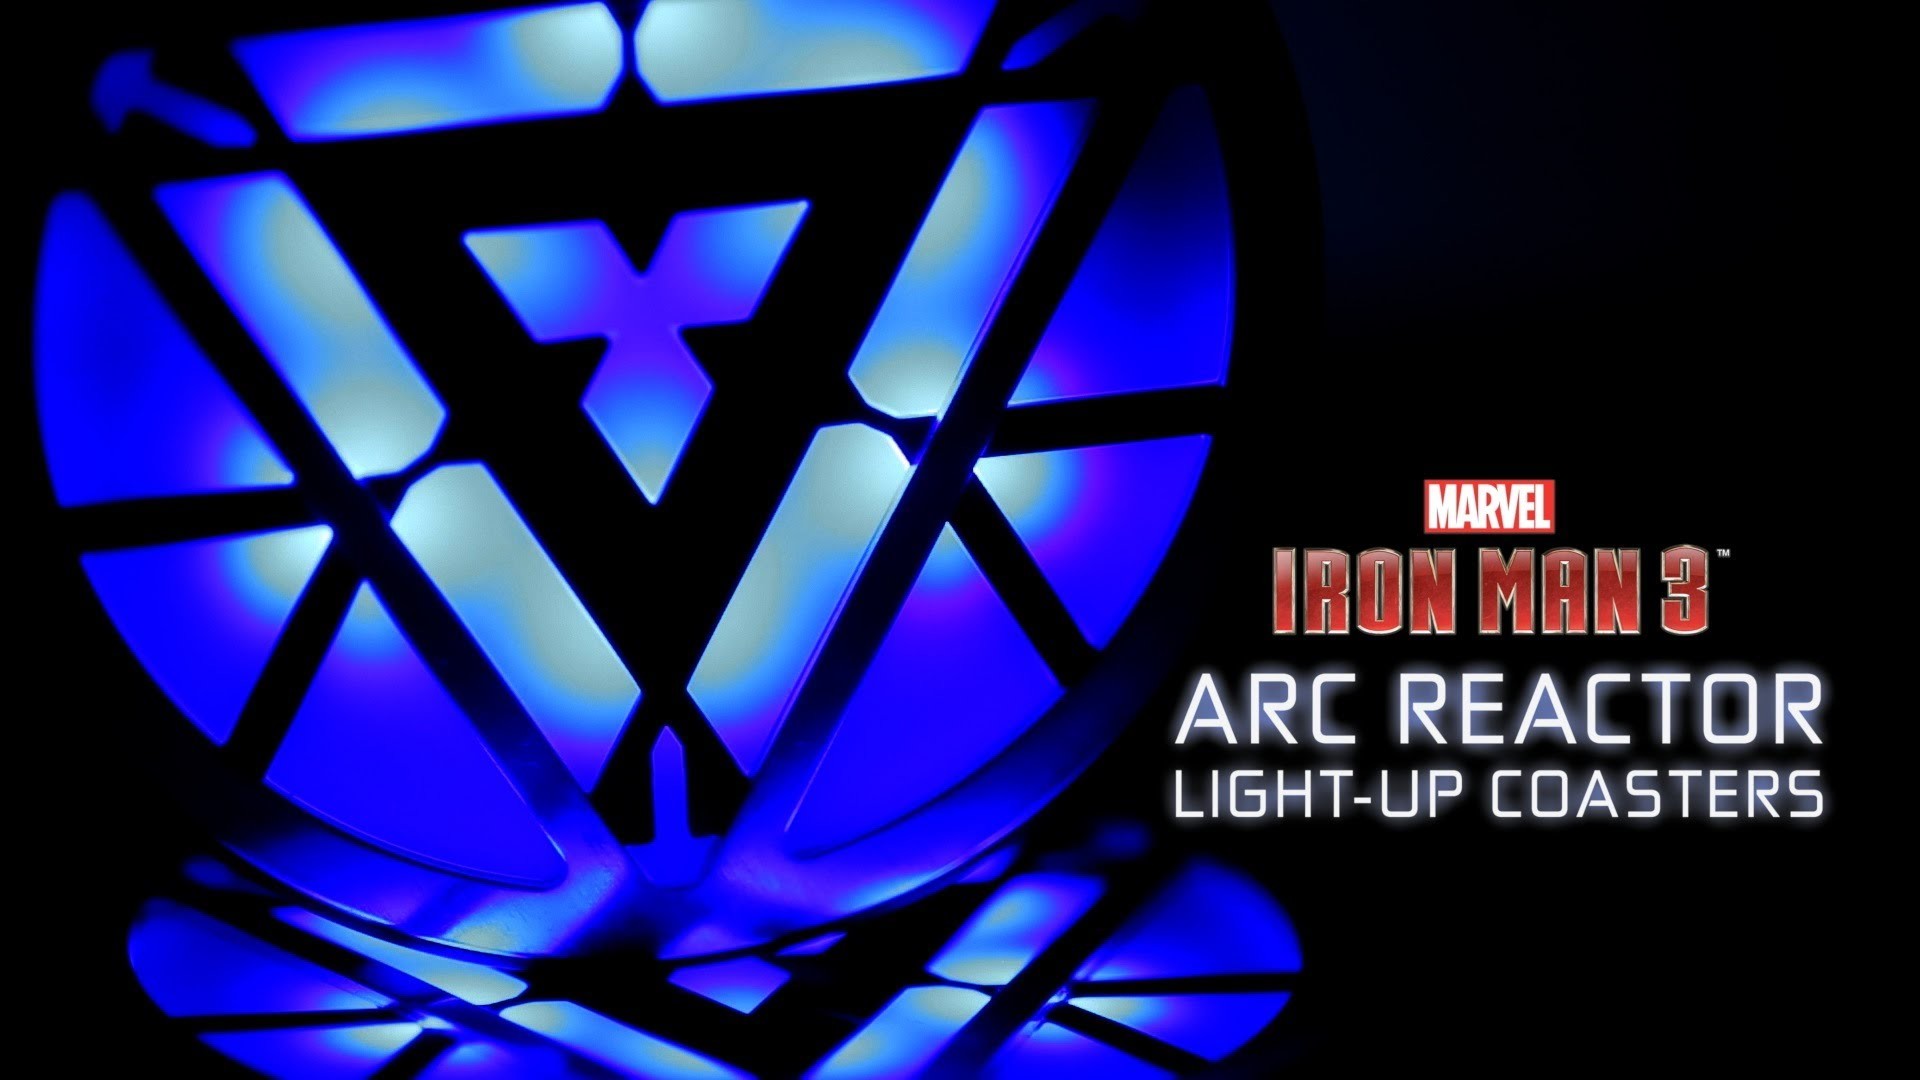 1920x1080 Marvel Iron Man 3 Arc Reactor Light-Up Coasters from ThinkGeek - YouTube